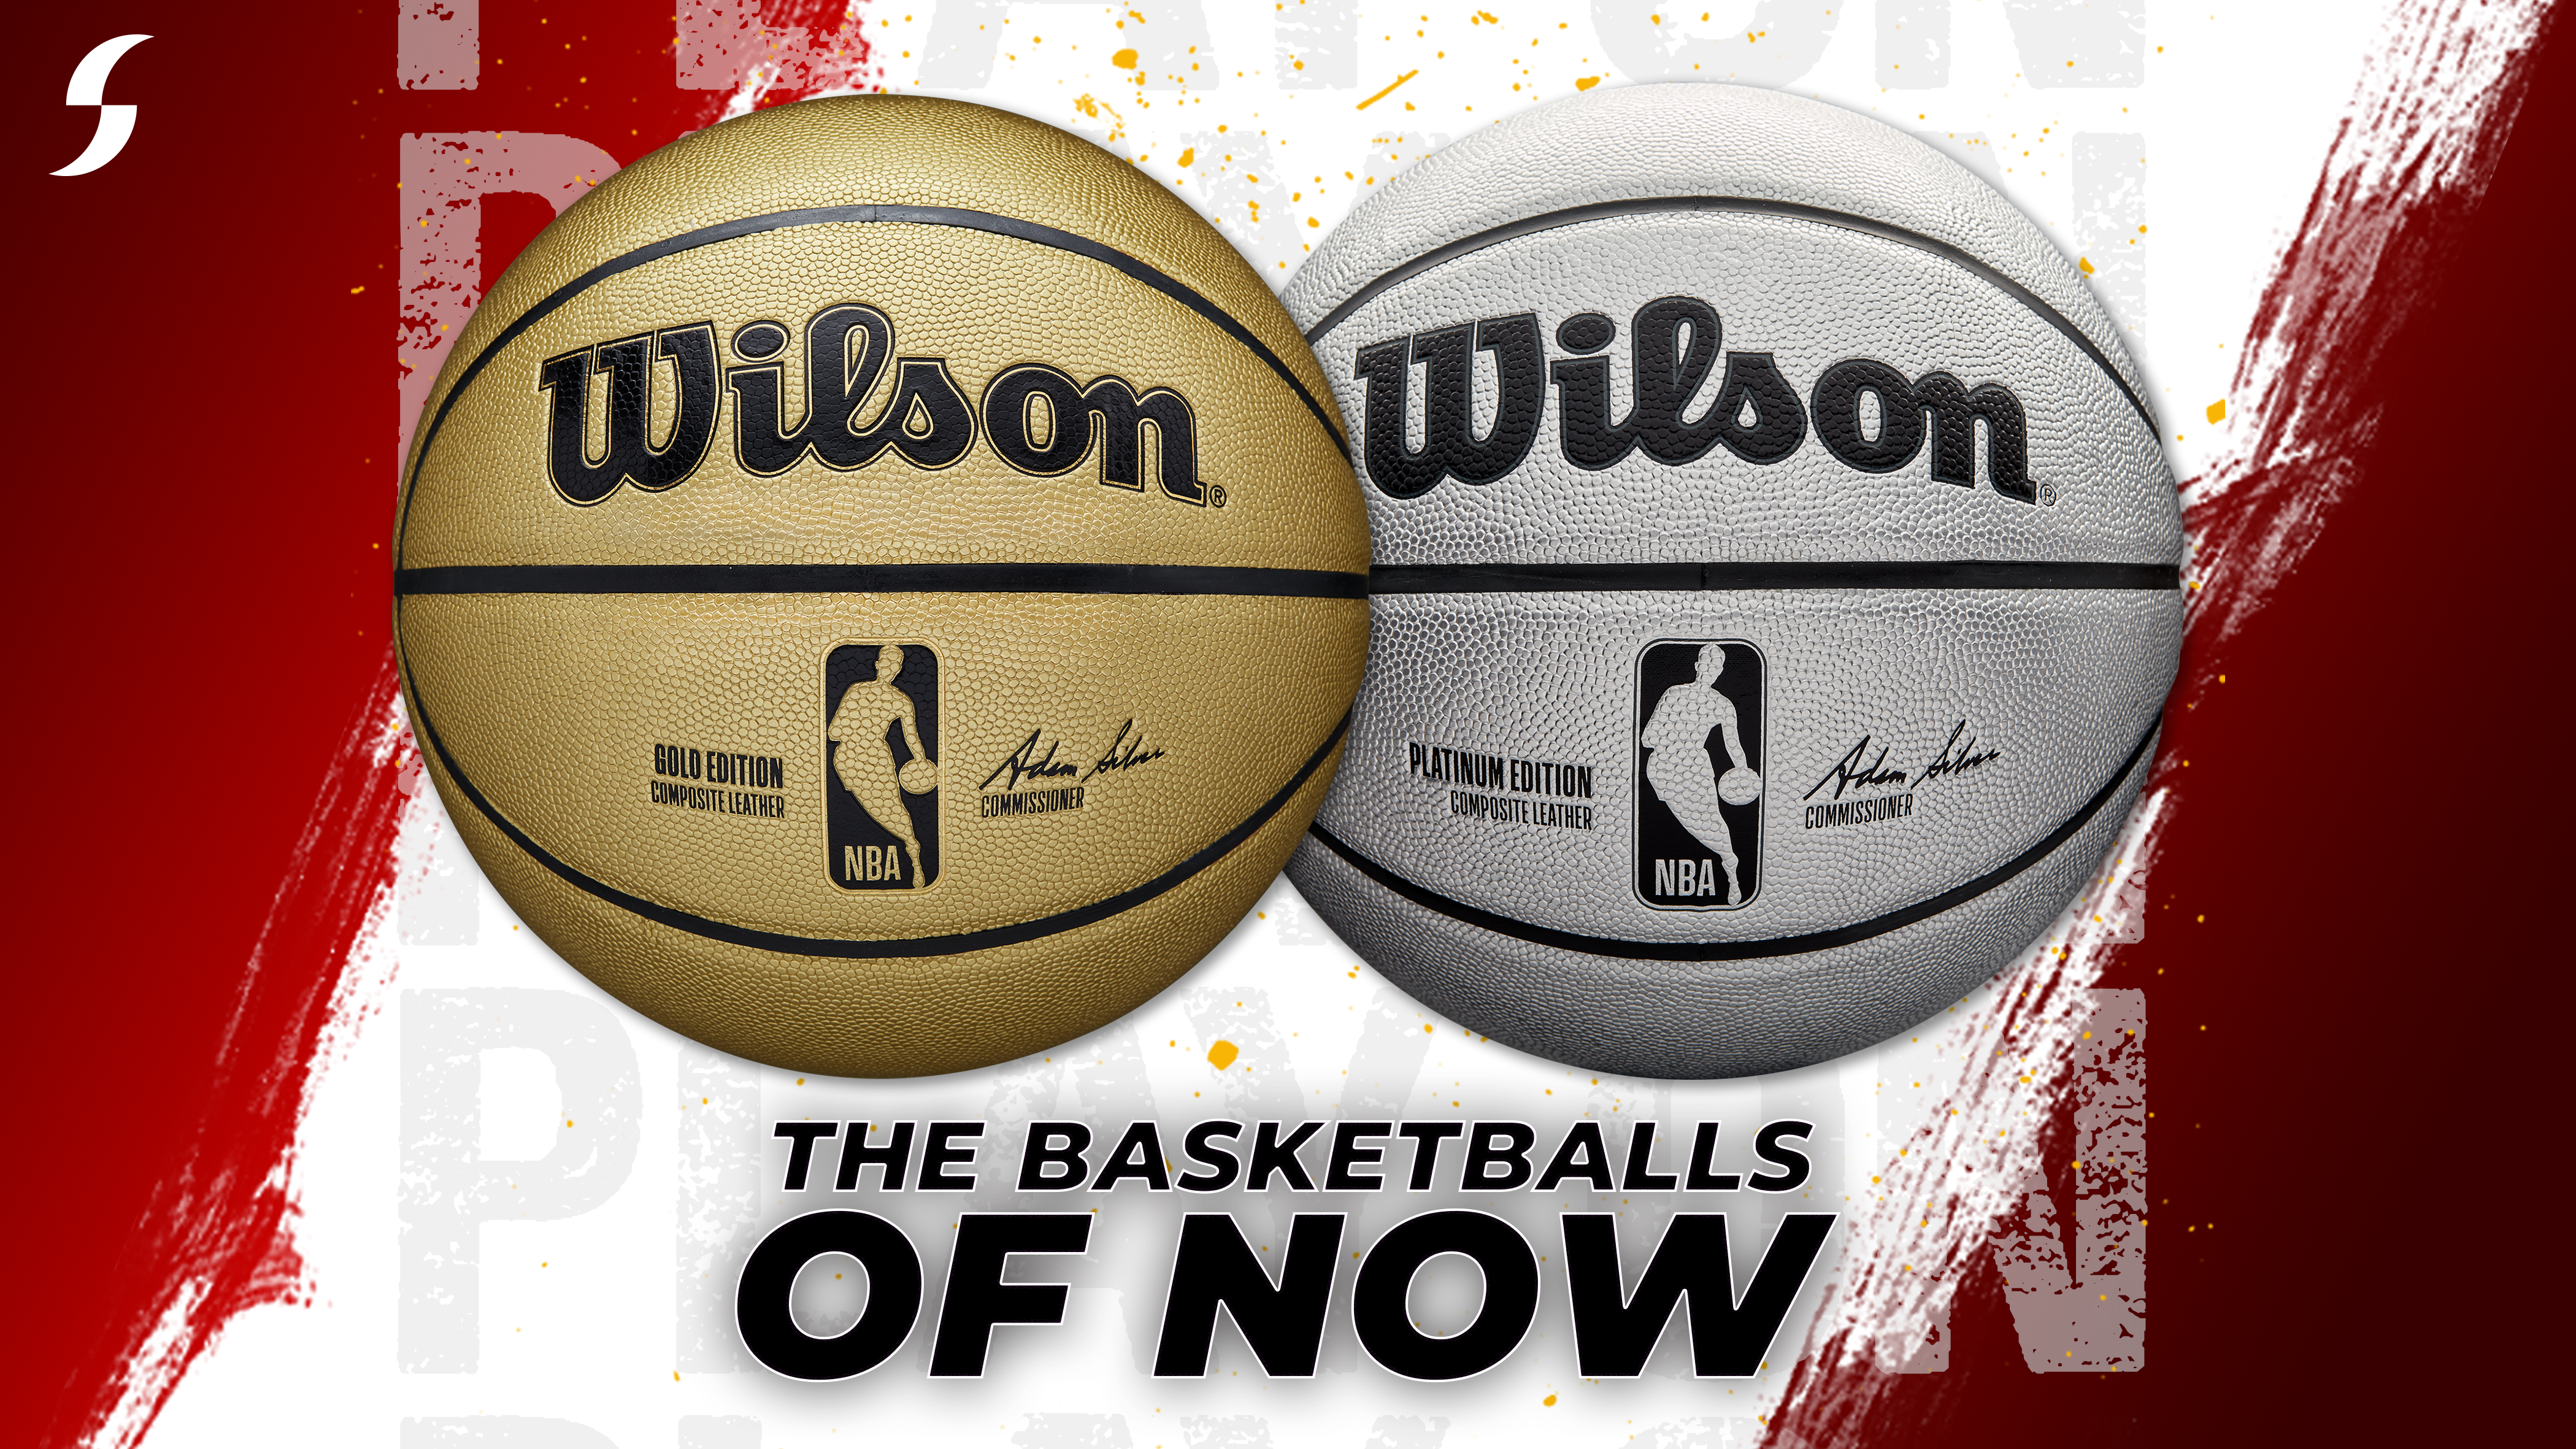 [EXCLUSIVE] Wilson Basketballs: The Basketballs of Now